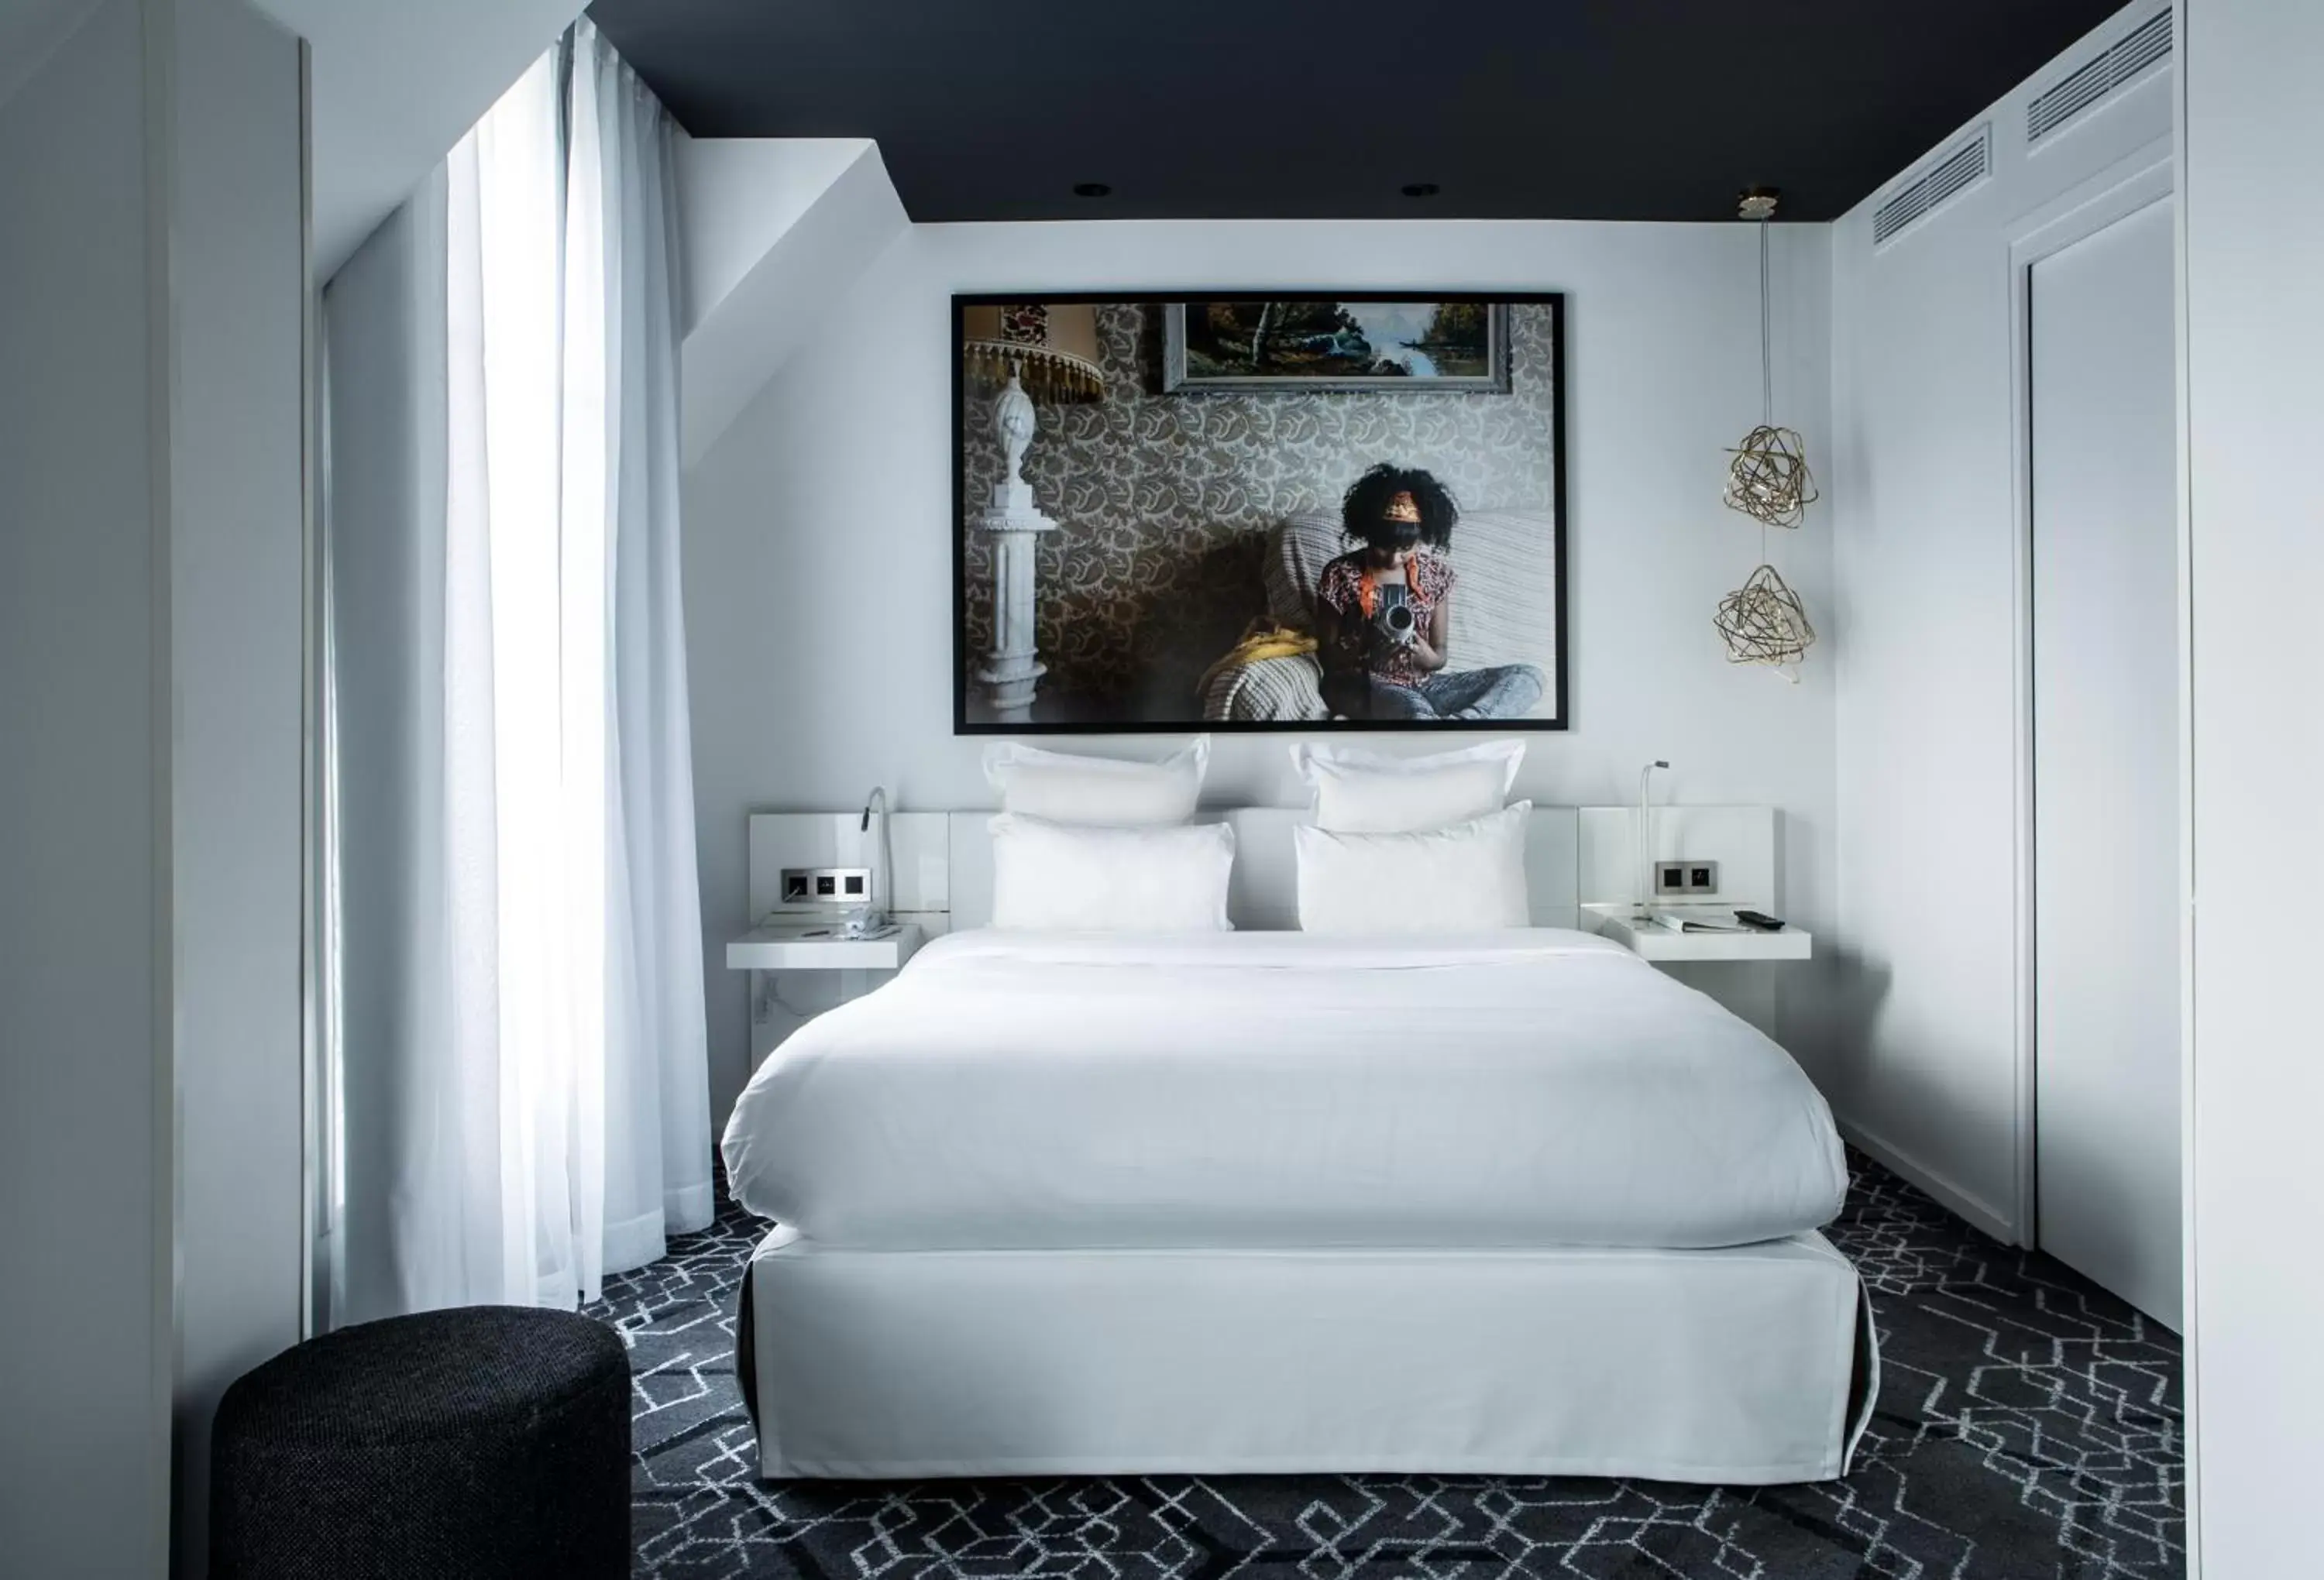 Bed in Le Général Hôtel